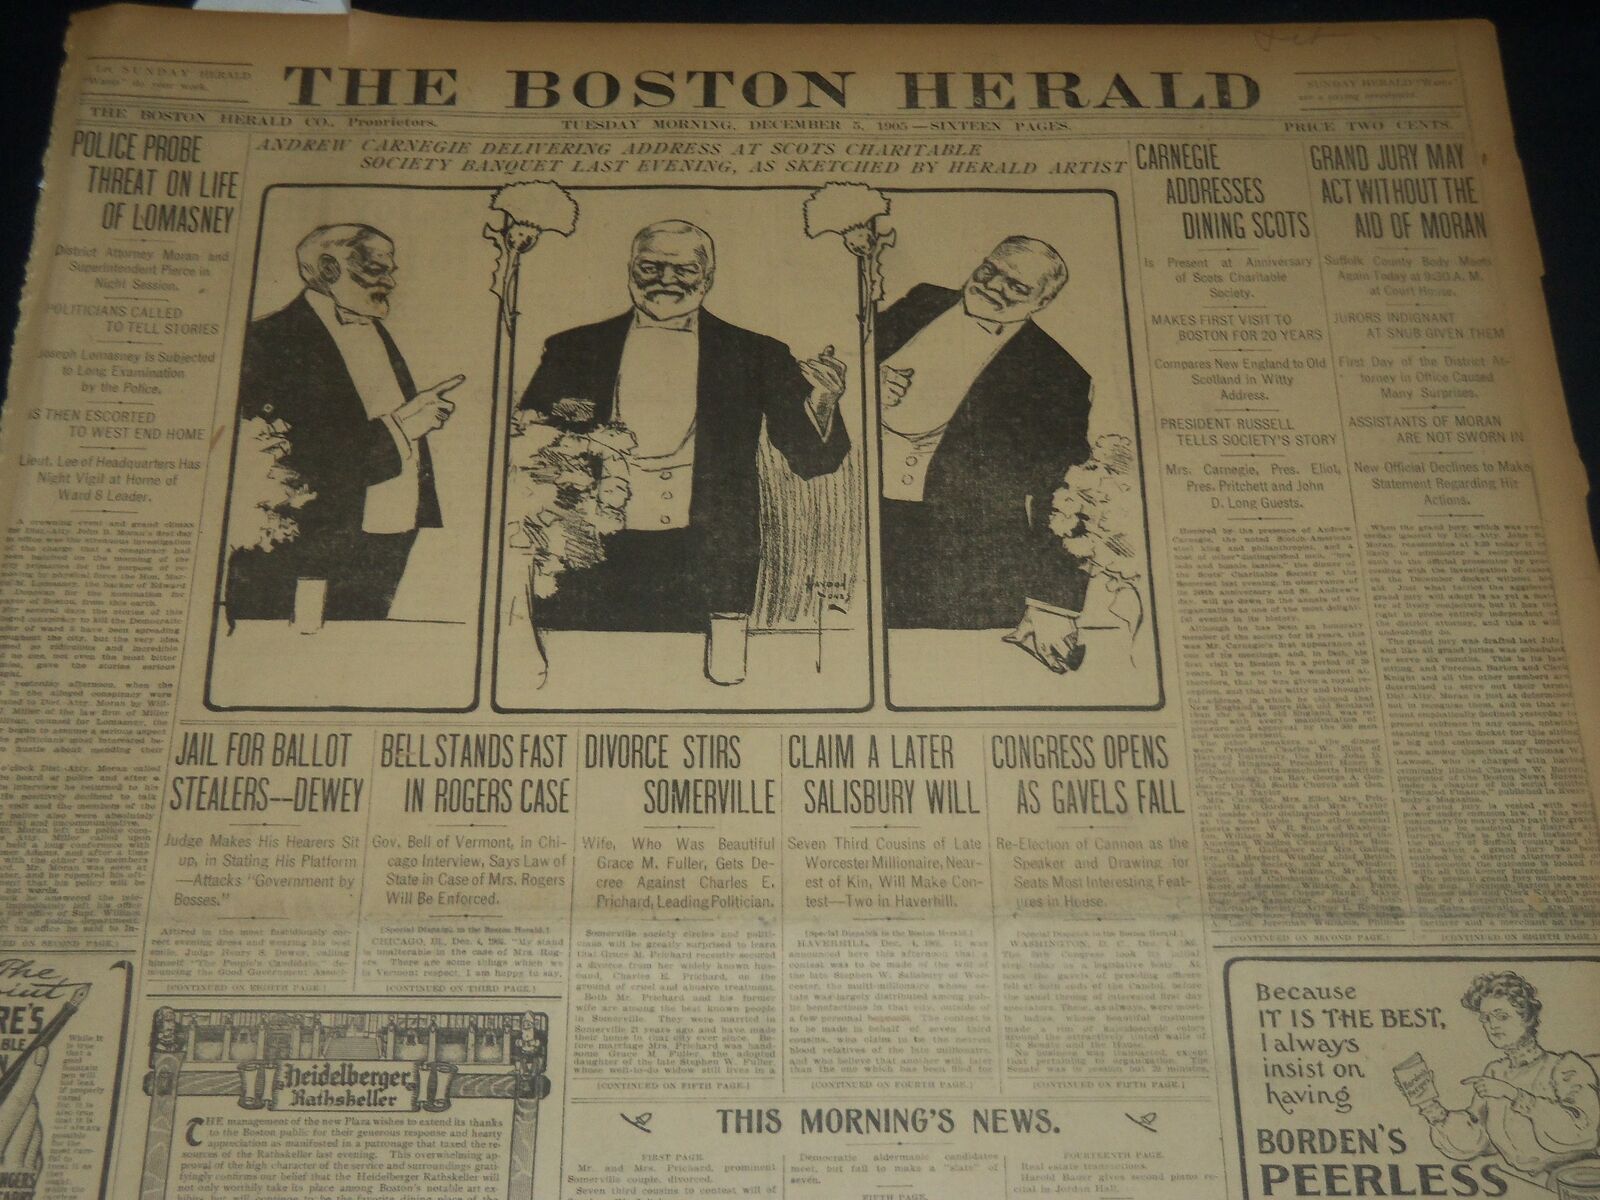 1905 DECEMBER 5 THE BOSTON HERALD - CARNEGIE ADDRESSES DINING SCOTS - BH 269